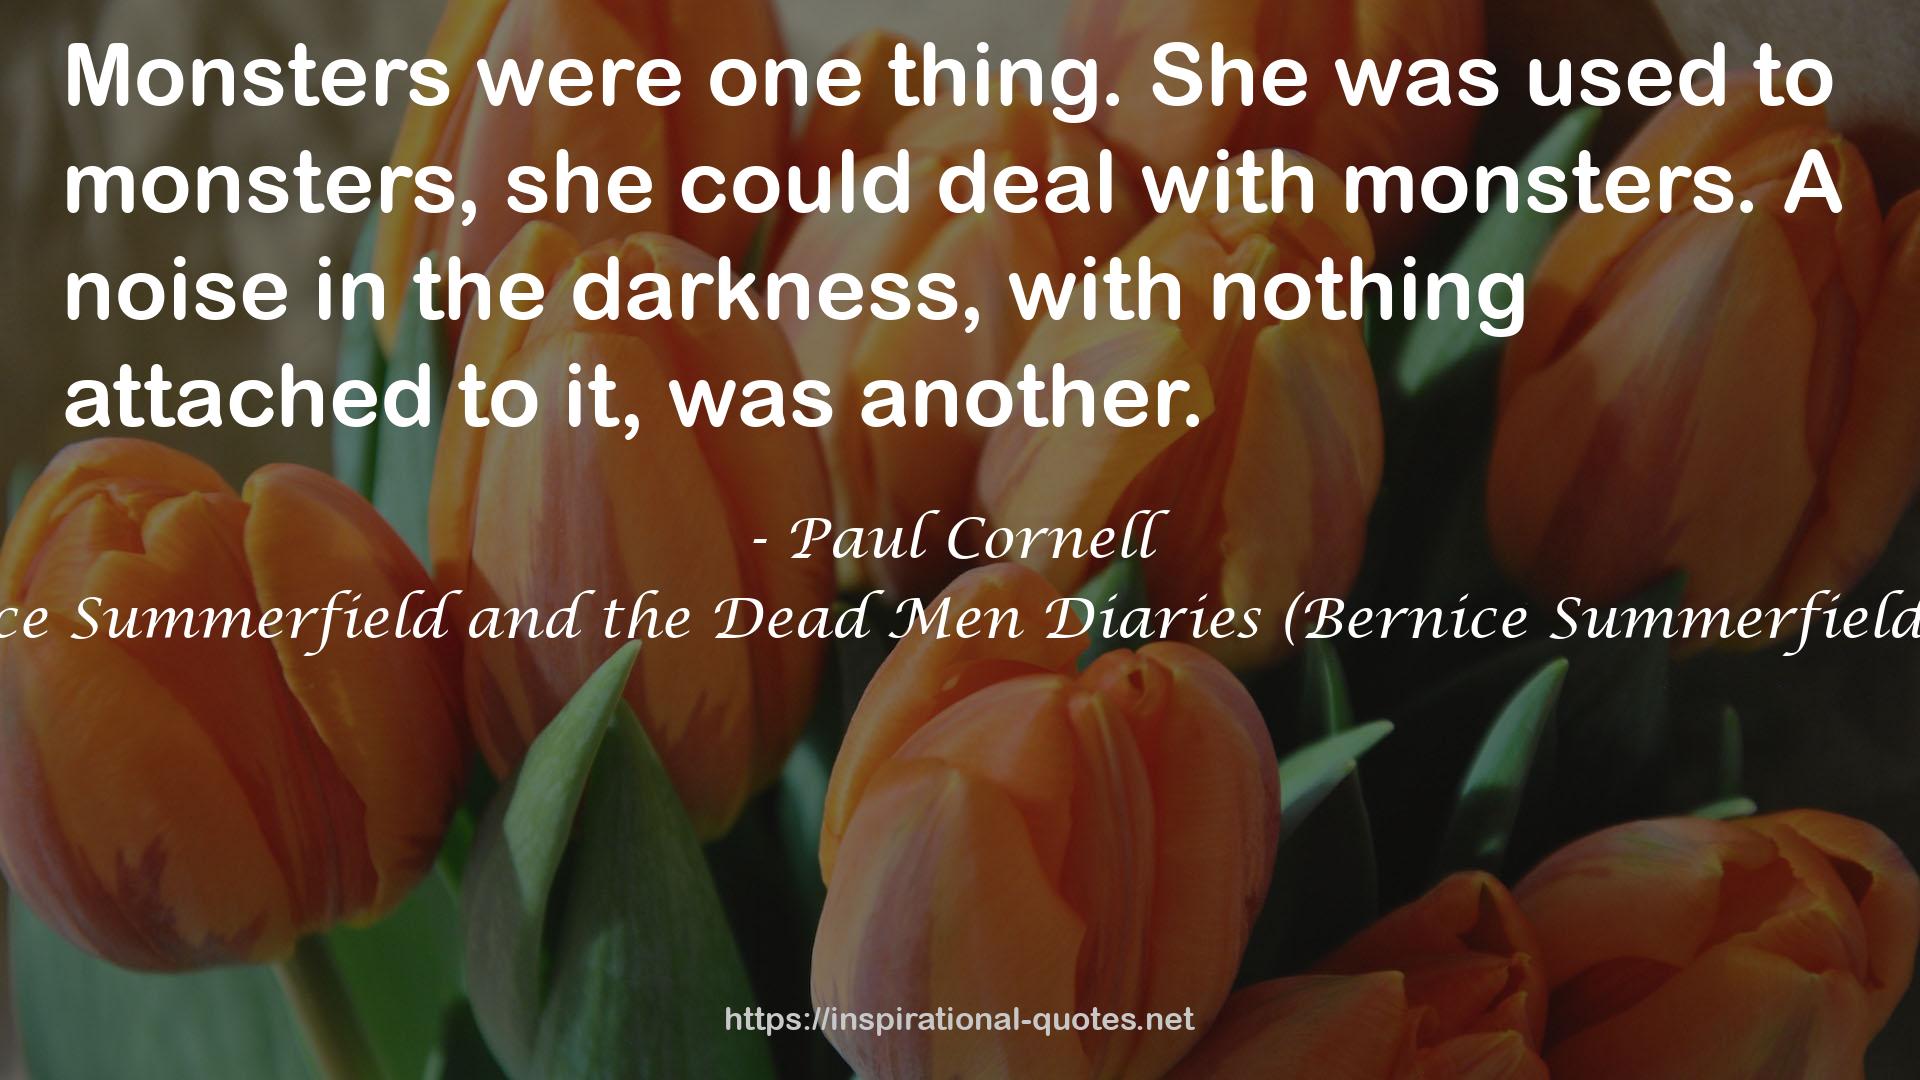 Professor Bernice Summerfield and the Dead Men Diaries (Bernice Summerfield Anthologies #1) QUOTES